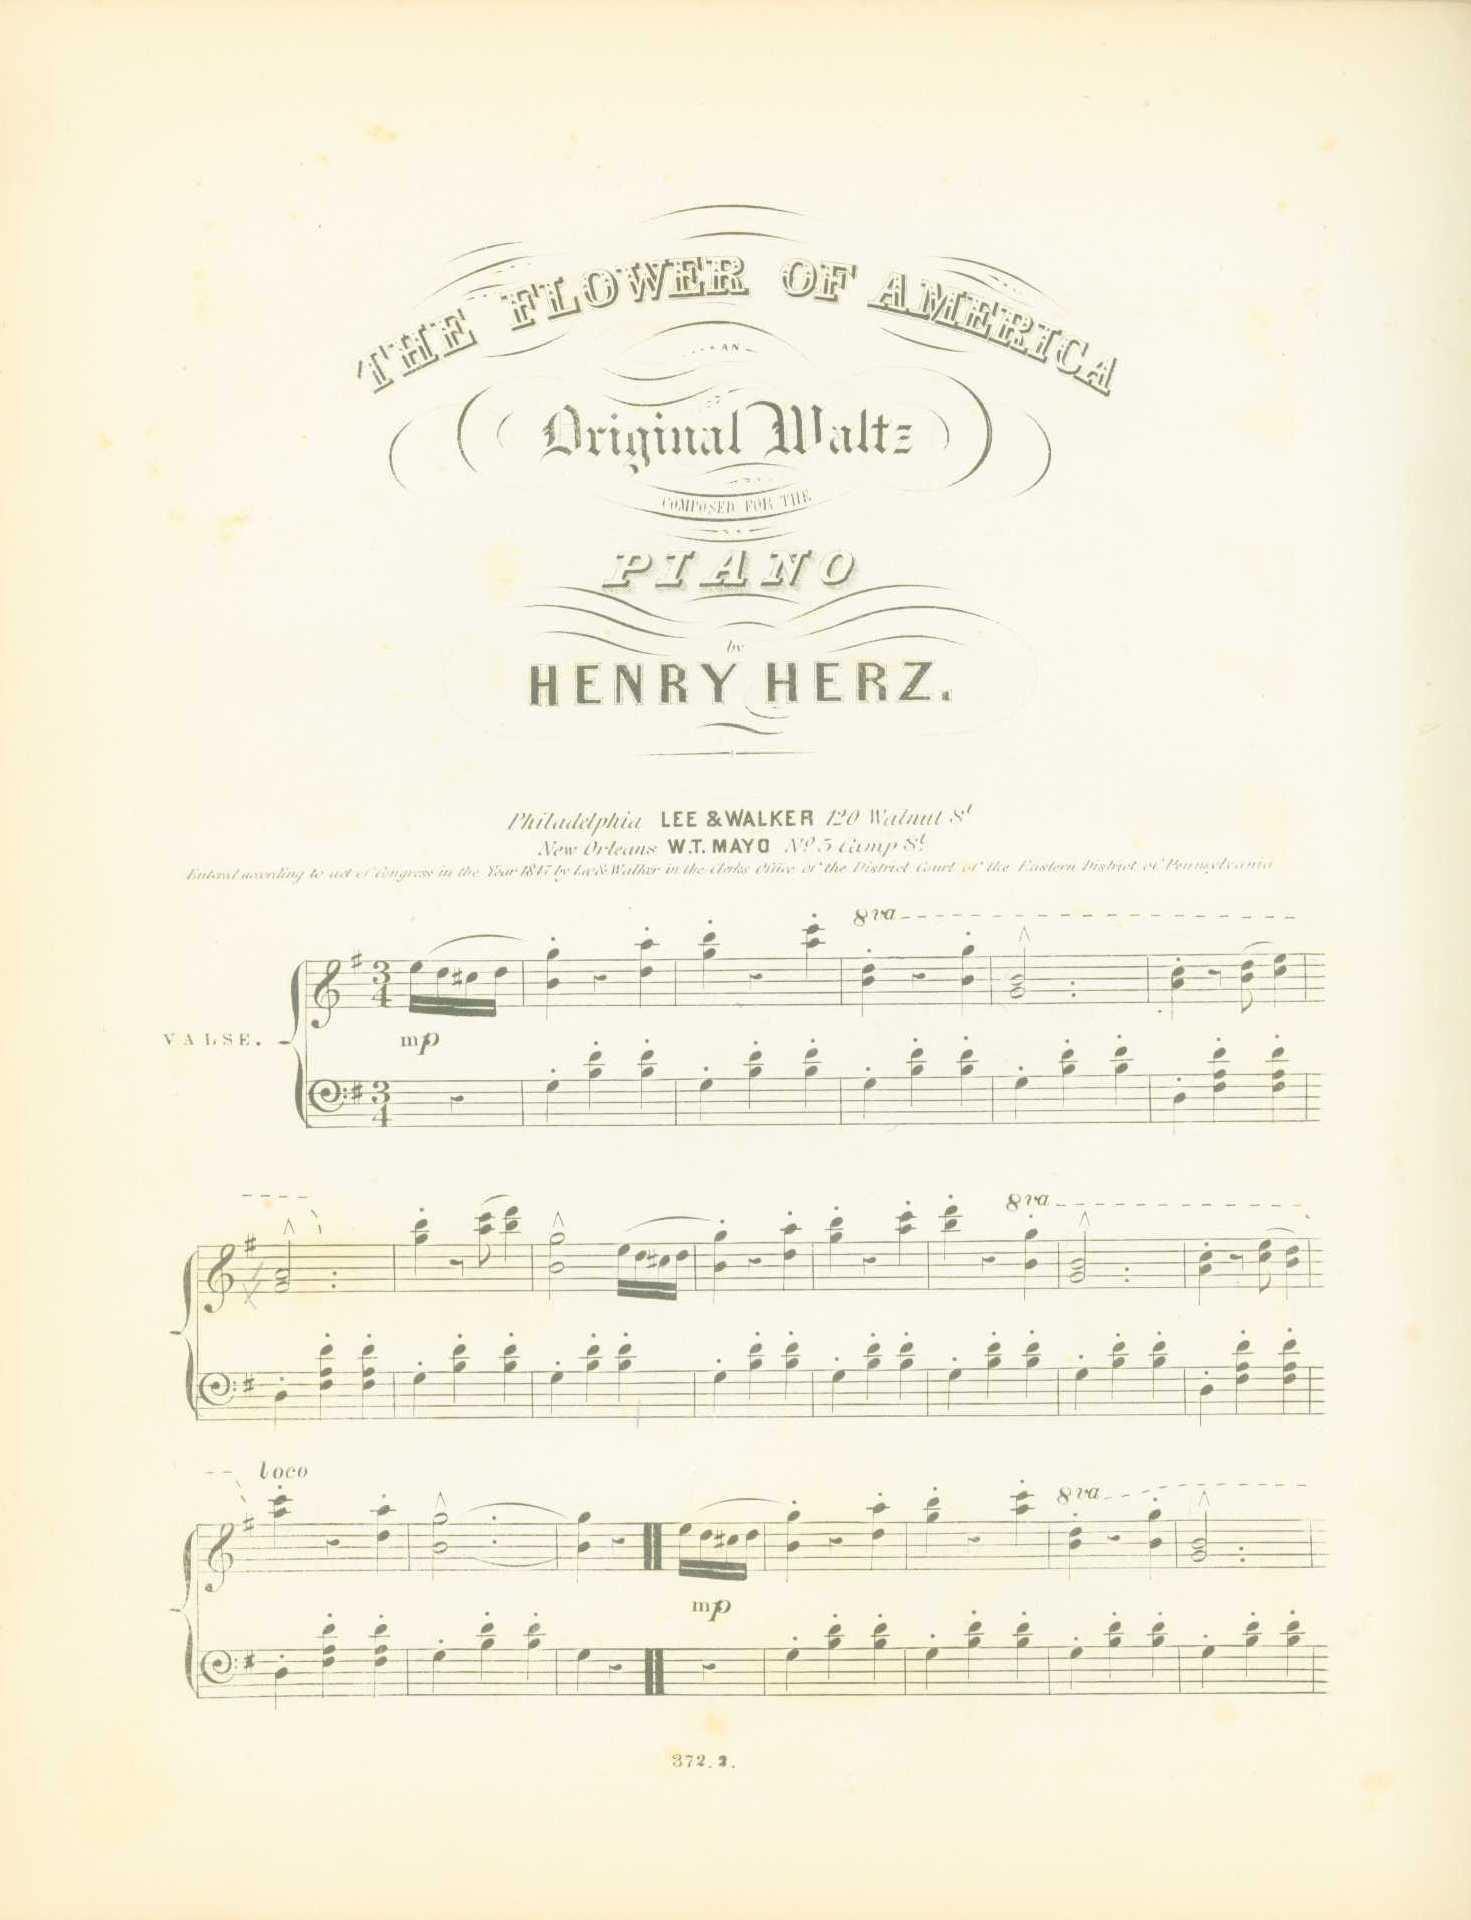 Herz, Henri - The Flower of America, an Original Waltz